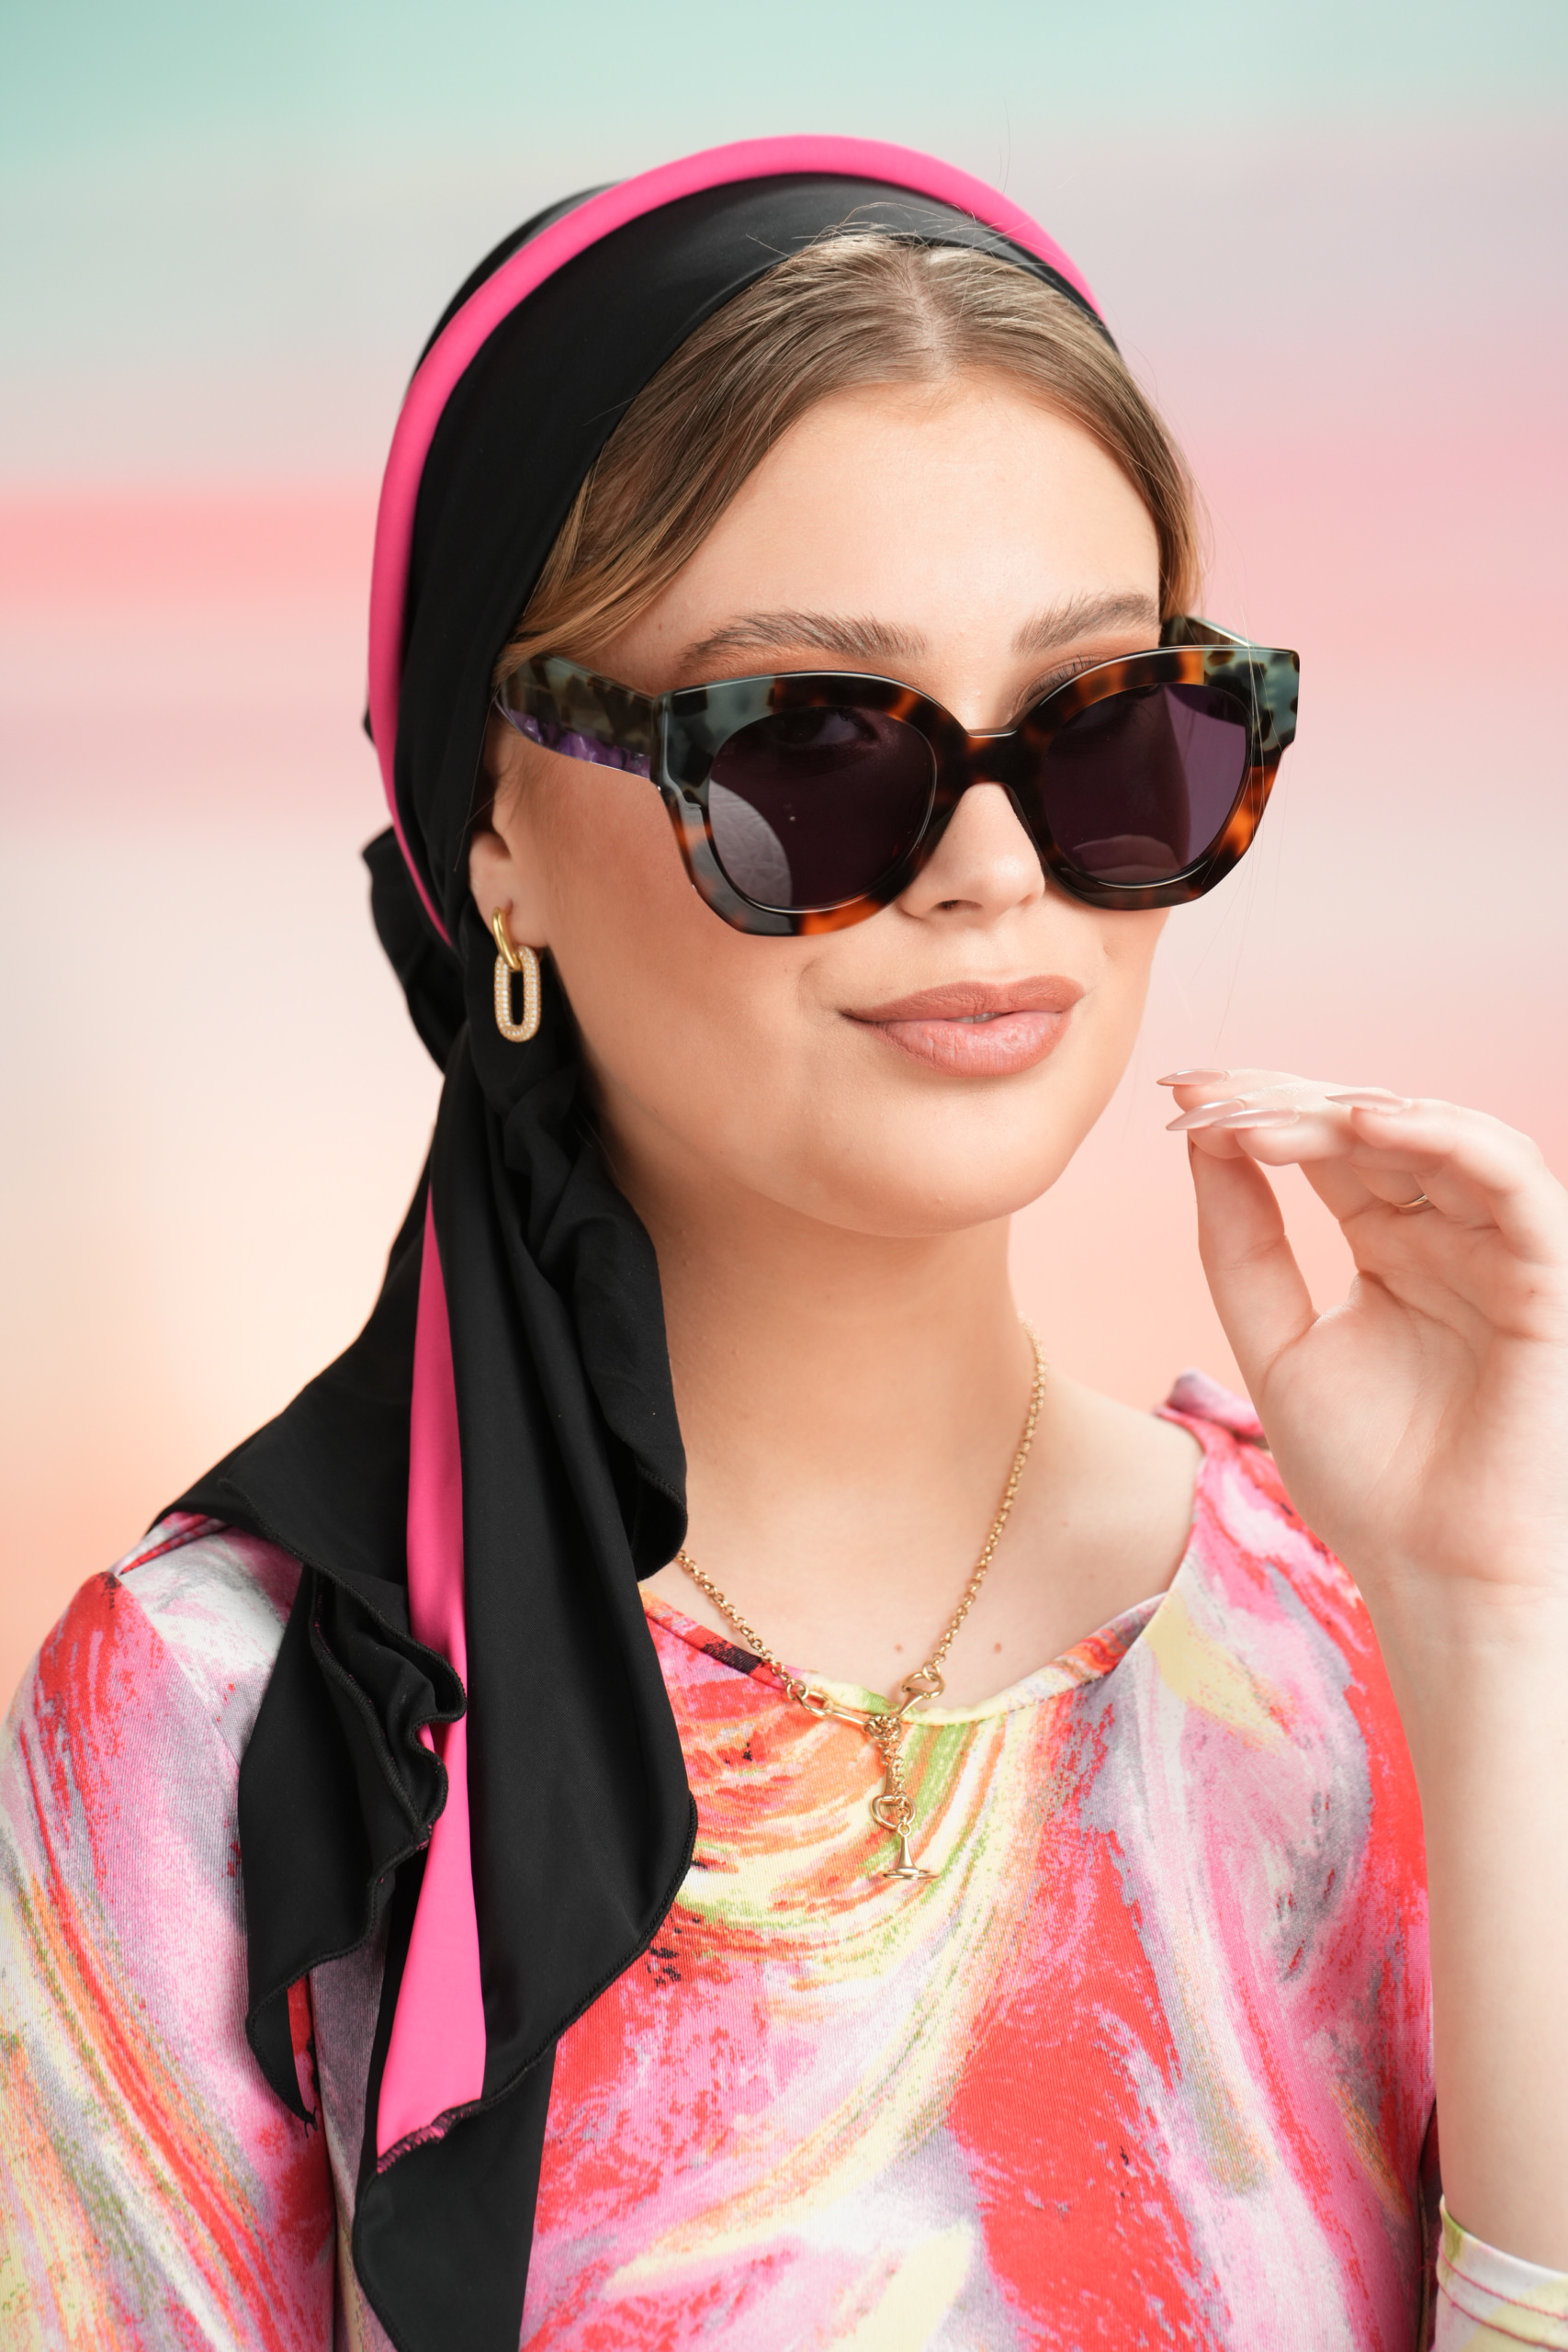 Beach Headscarf with black base & pink fuchsia headband